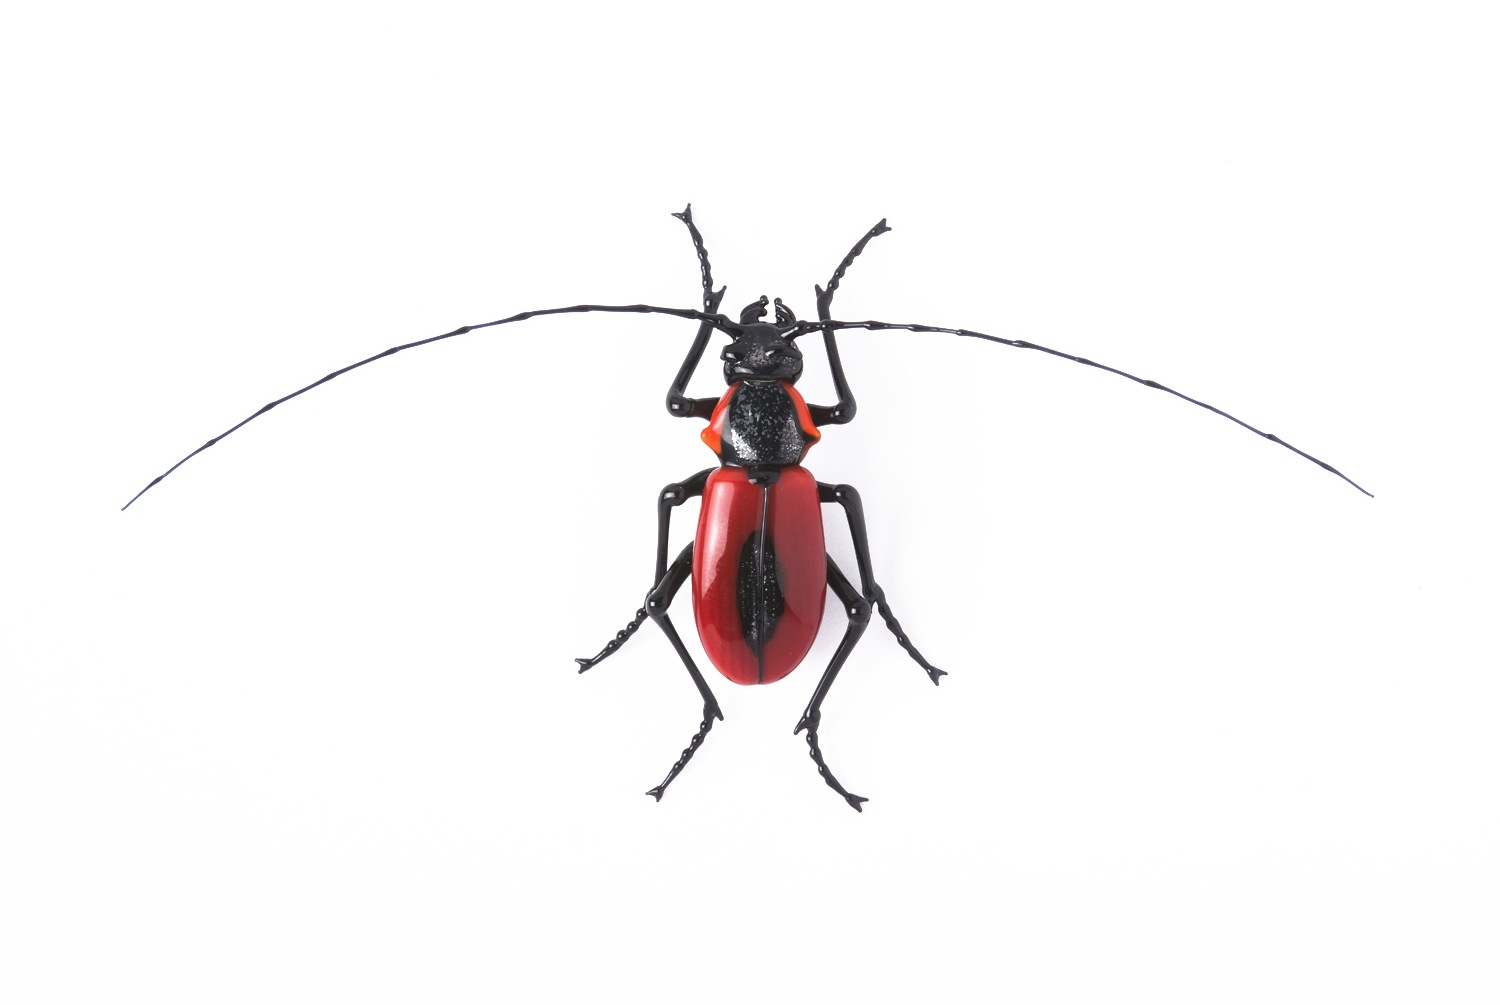  Vittorio Costantini,&nbsp; Family: Cerambycidae "Purpuricenus Kaehleri"&nbsp; (2005, soda-lime glass, 2 5/16 x 4 11/16 x 5/8 inches), VC.34 